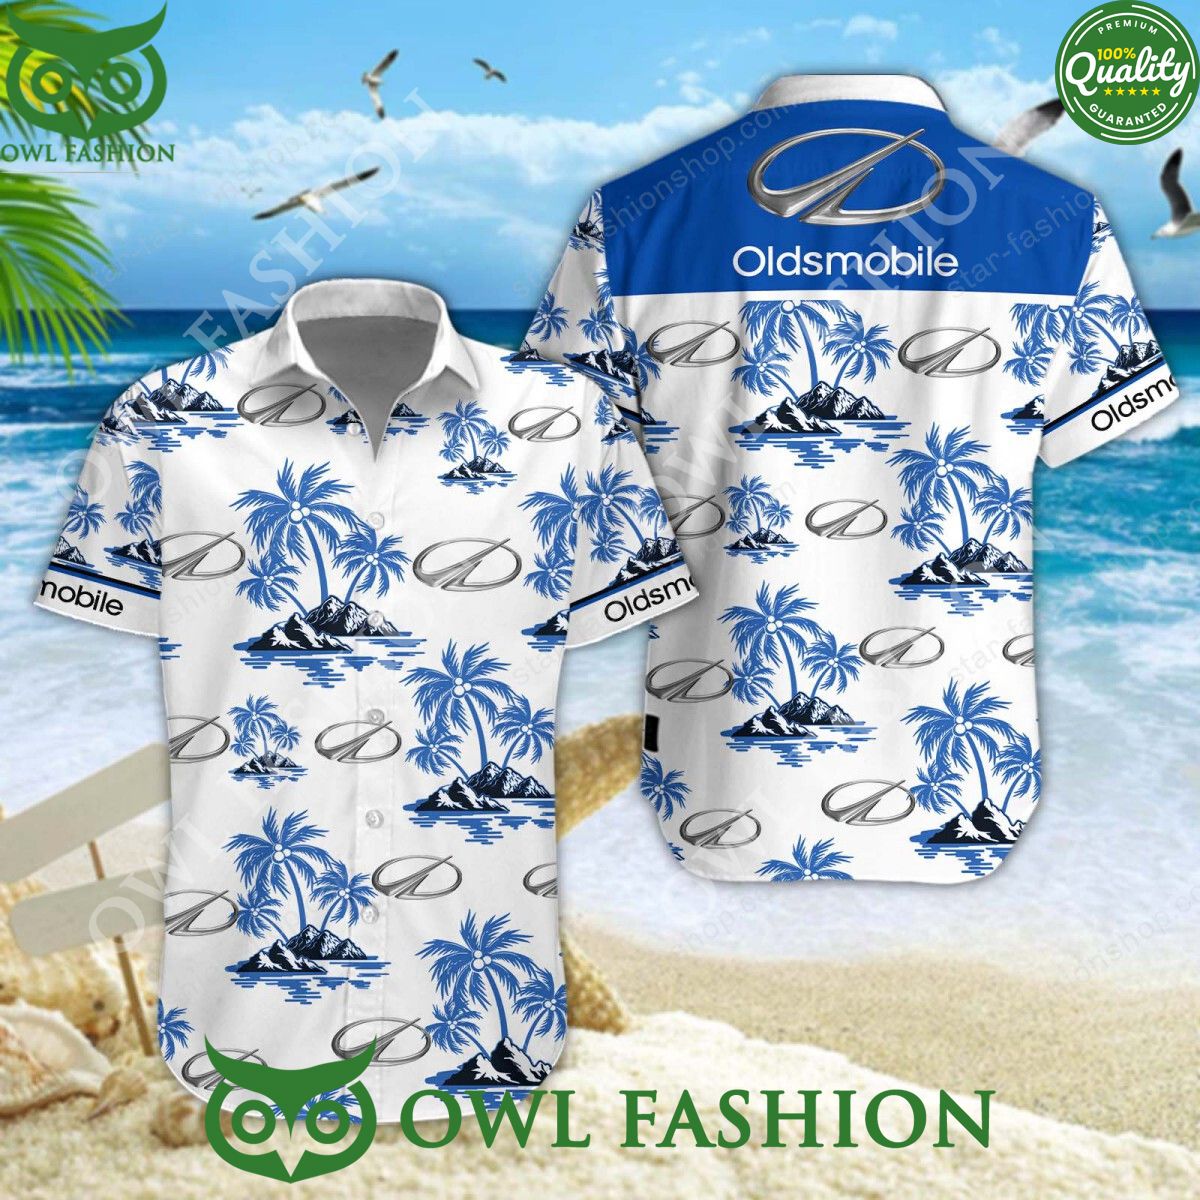 Oldsmobile Luxury Car Manufacturer Limited Hawaiian Shirt Shorts